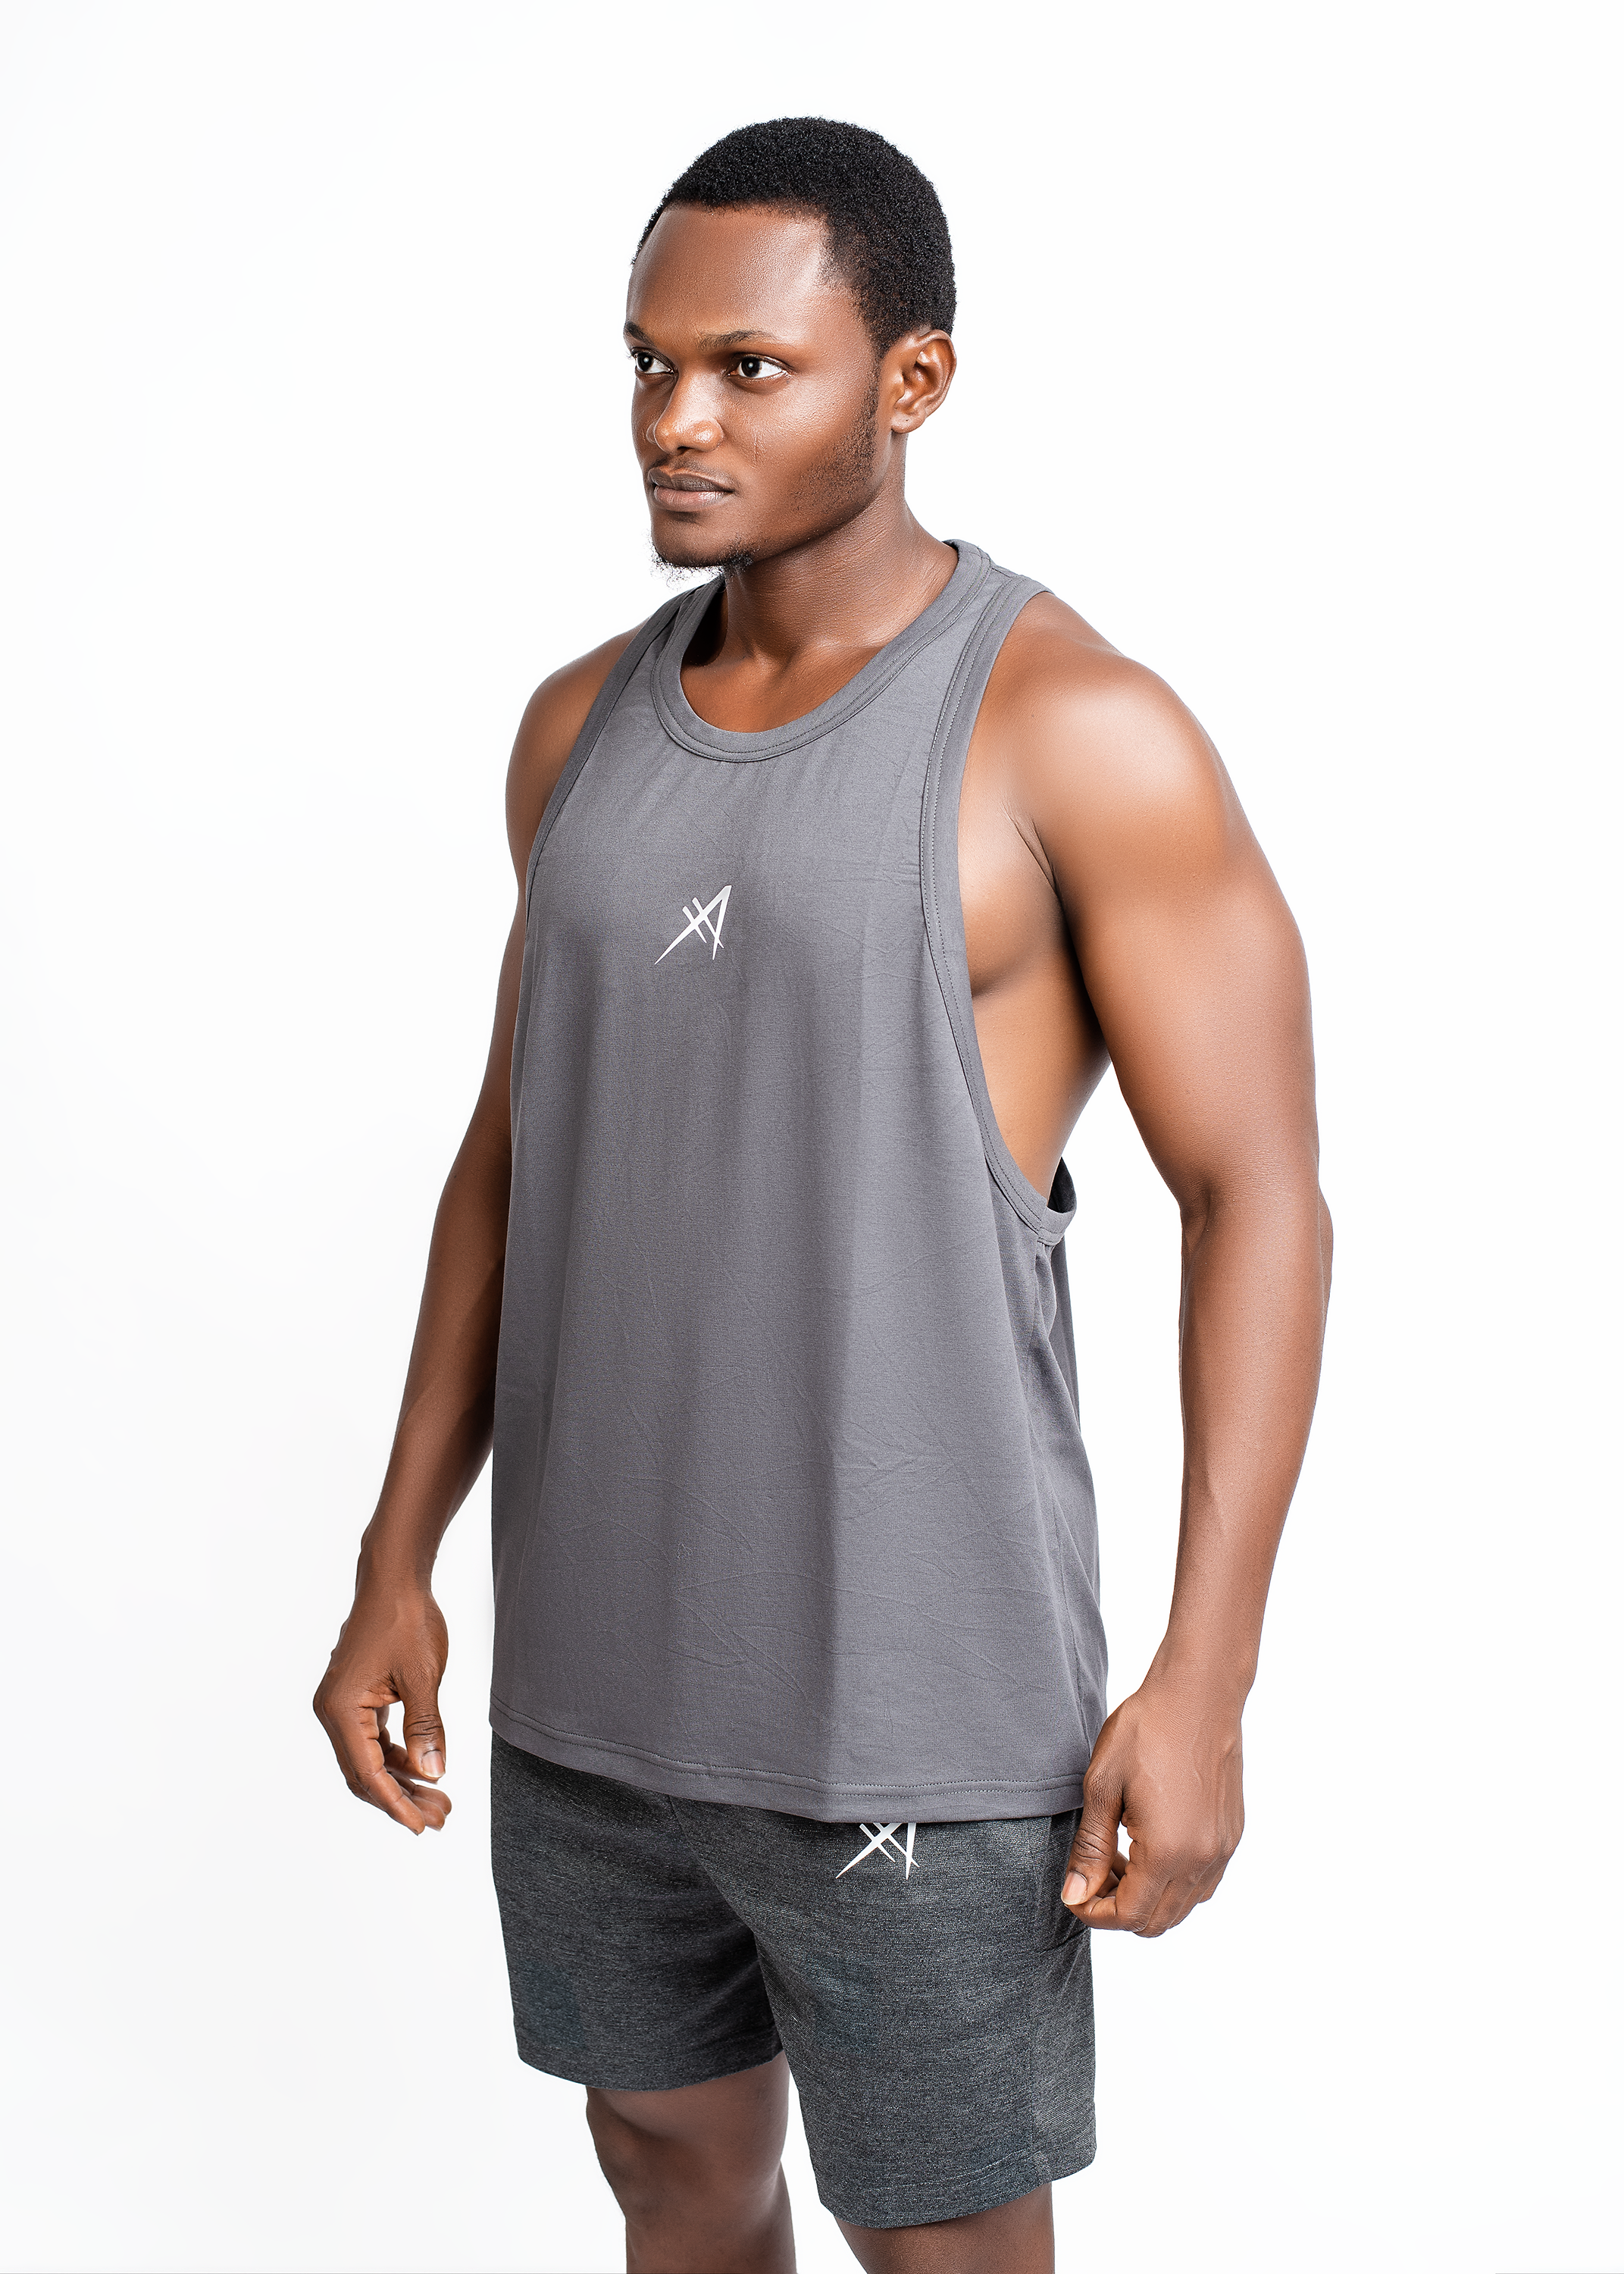 Men's Workout Tank Top Grey